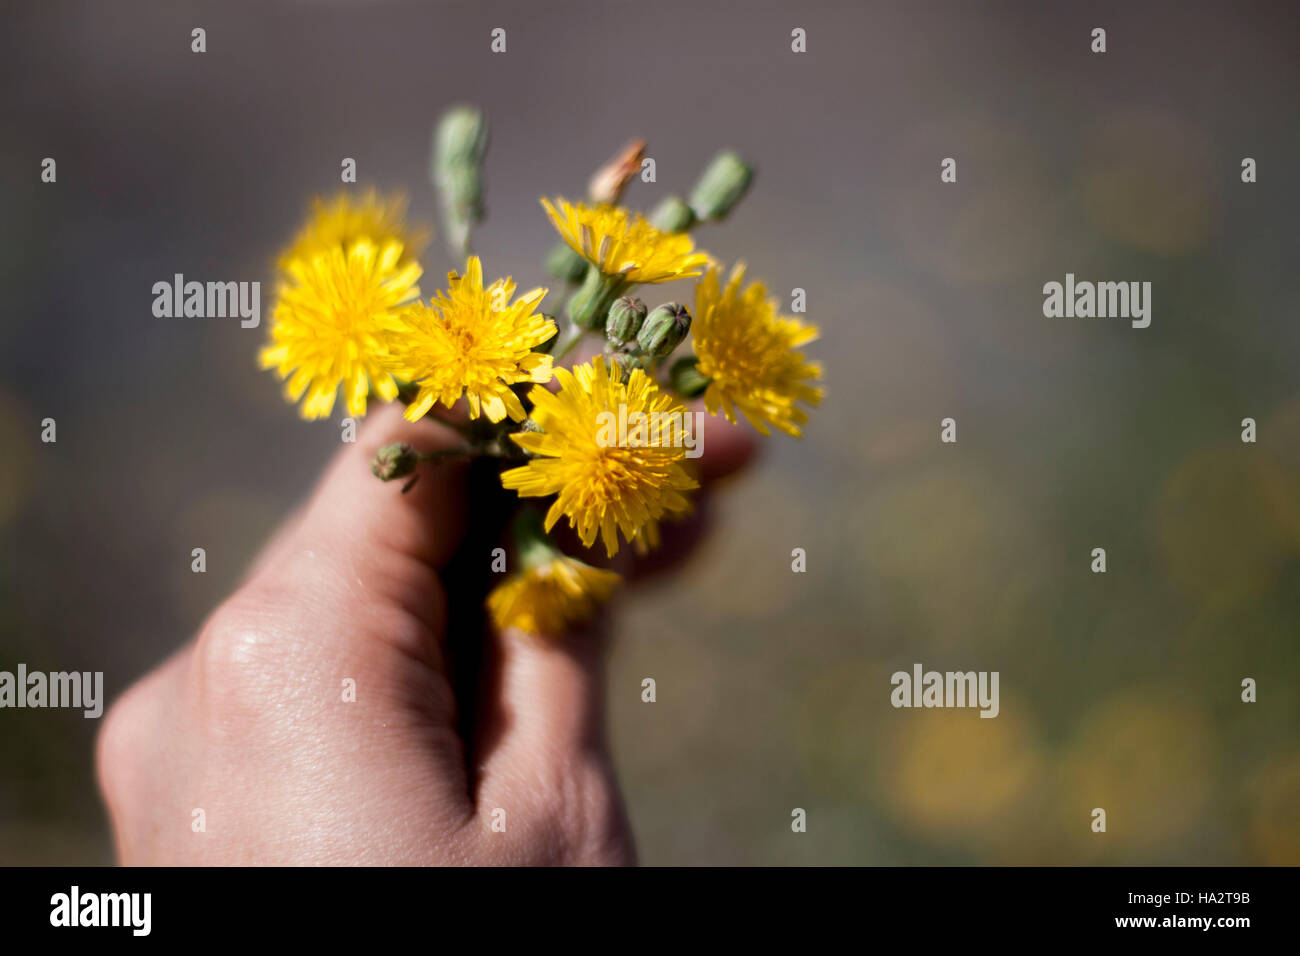 Woman's hand holding dandelion flowers Stock Photo